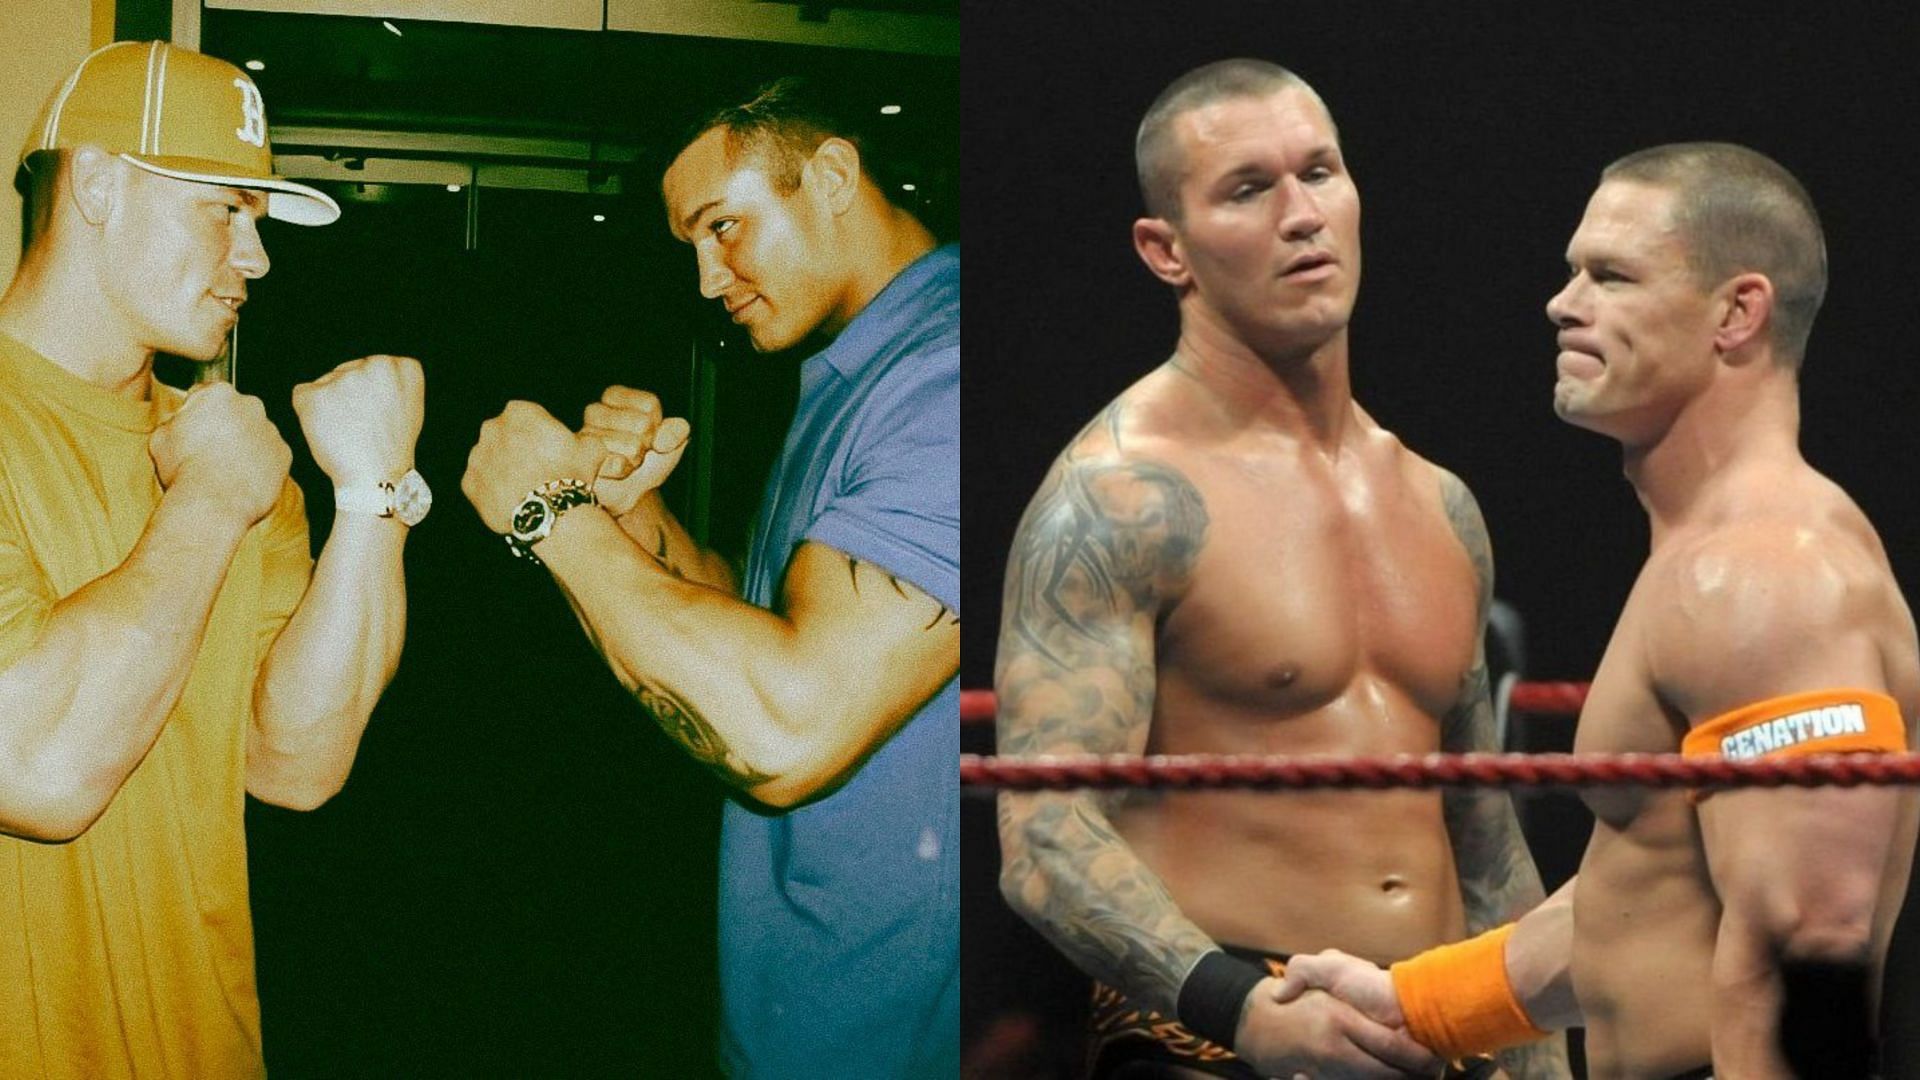 Randy Orton With John Cena